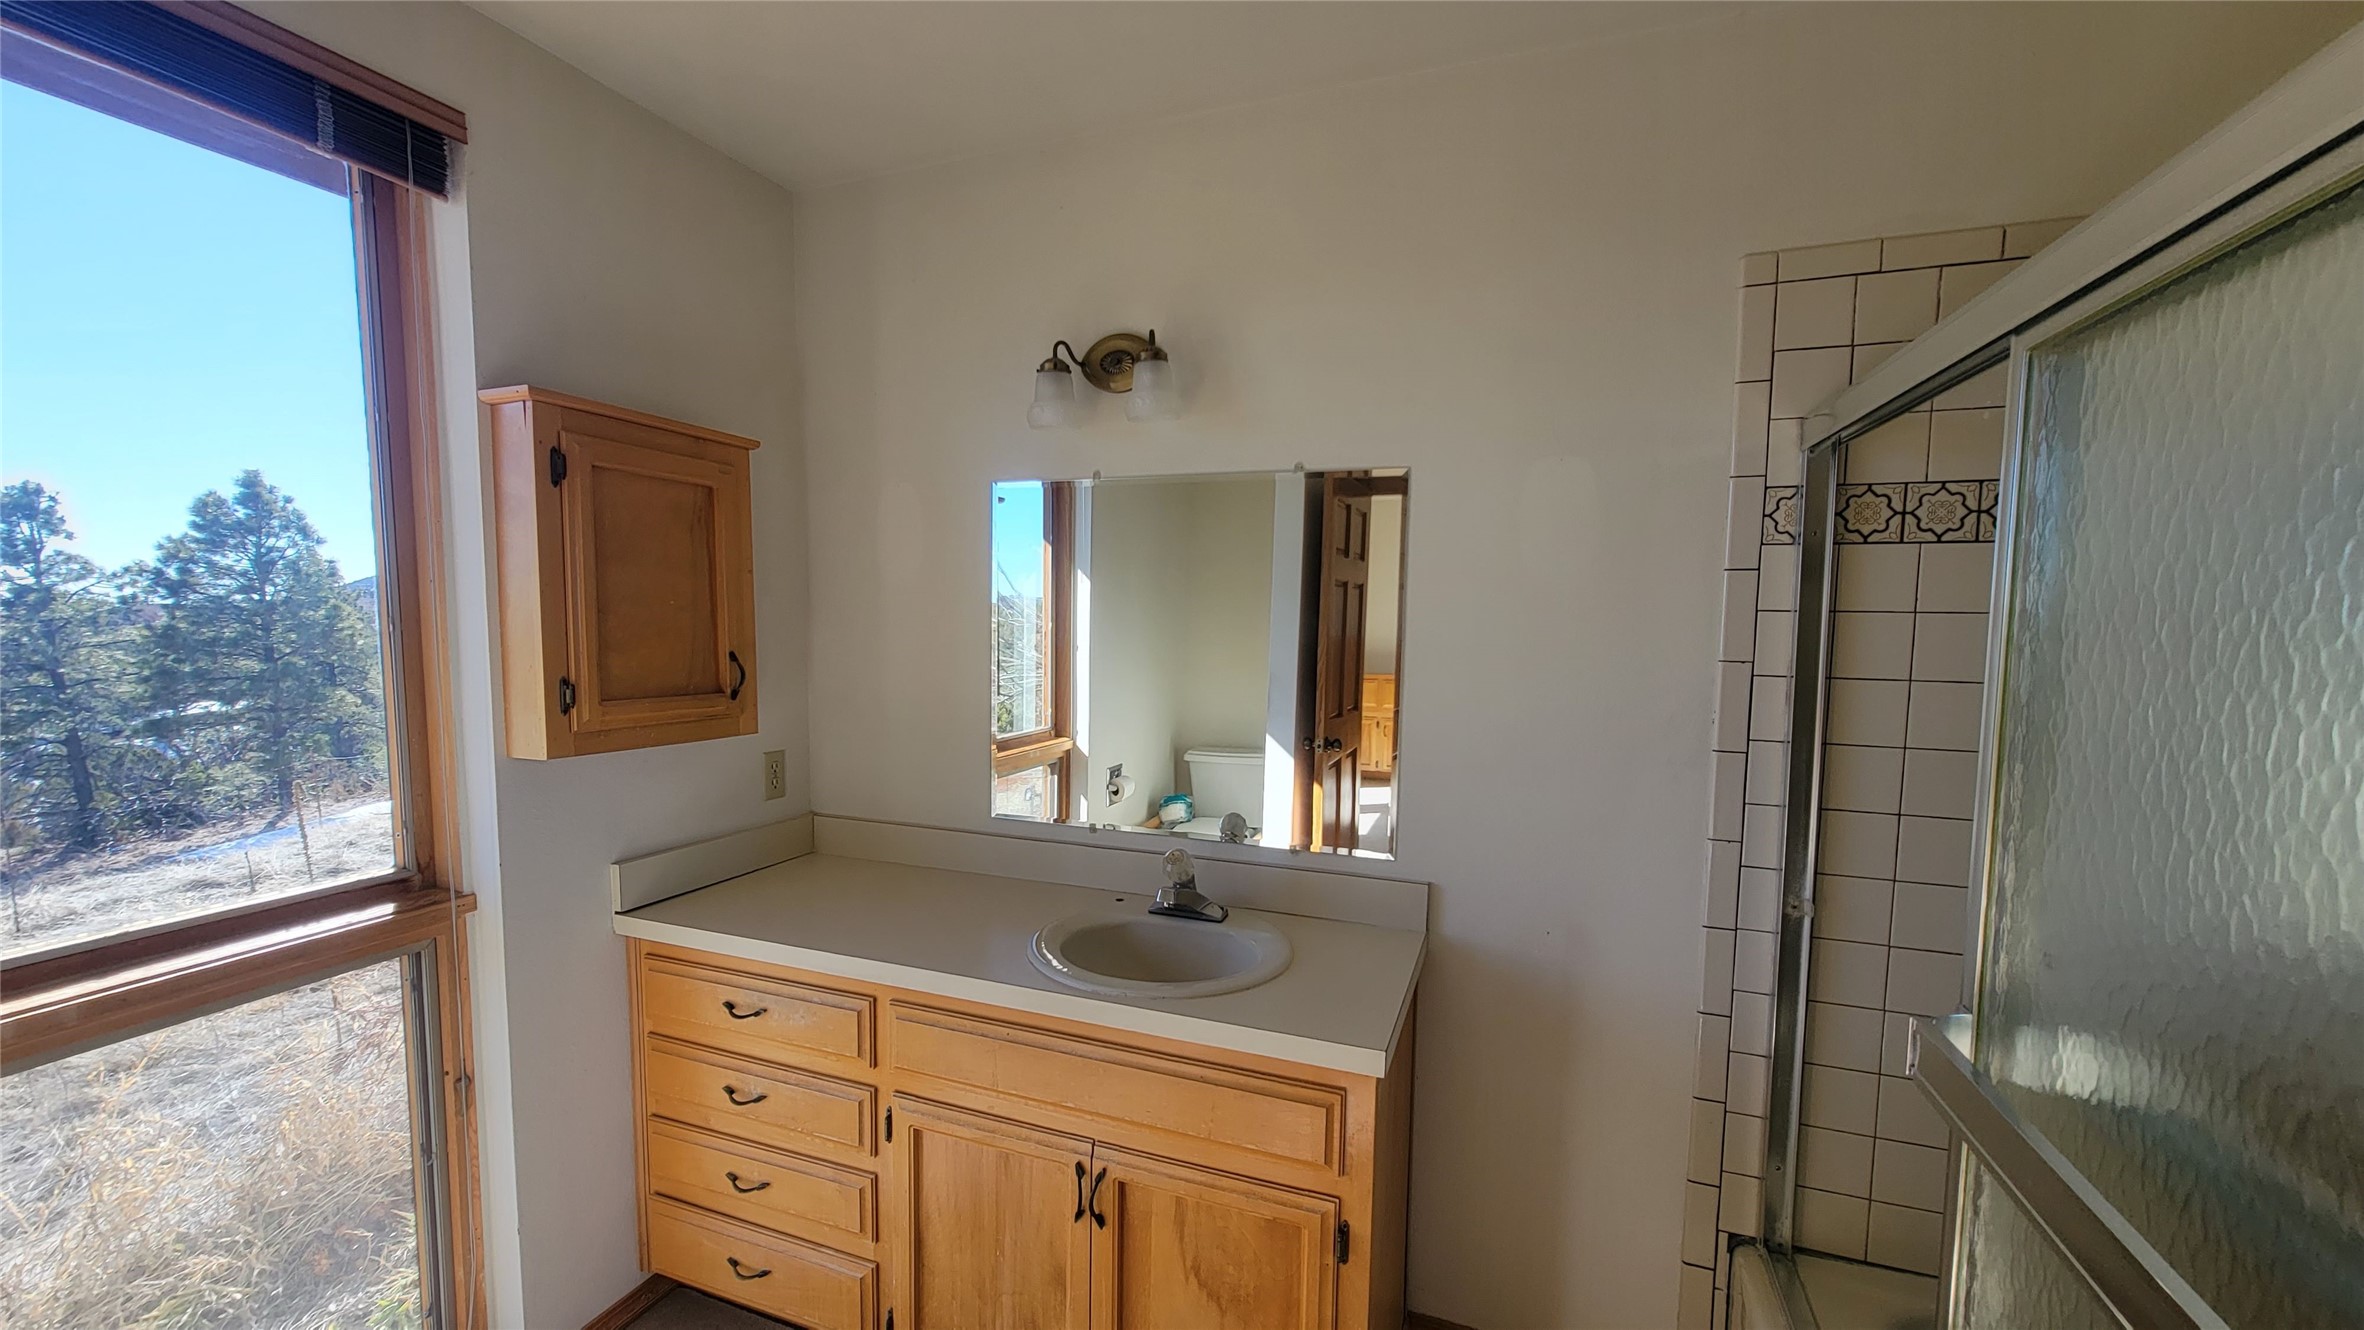 28 Ortiz, Santa Fe, New Mexico 87505, 3 Bedrooms Bedrooms, ,3 BathroomsBathrooms,Residential,For Sale,28 Ortiz,202400503